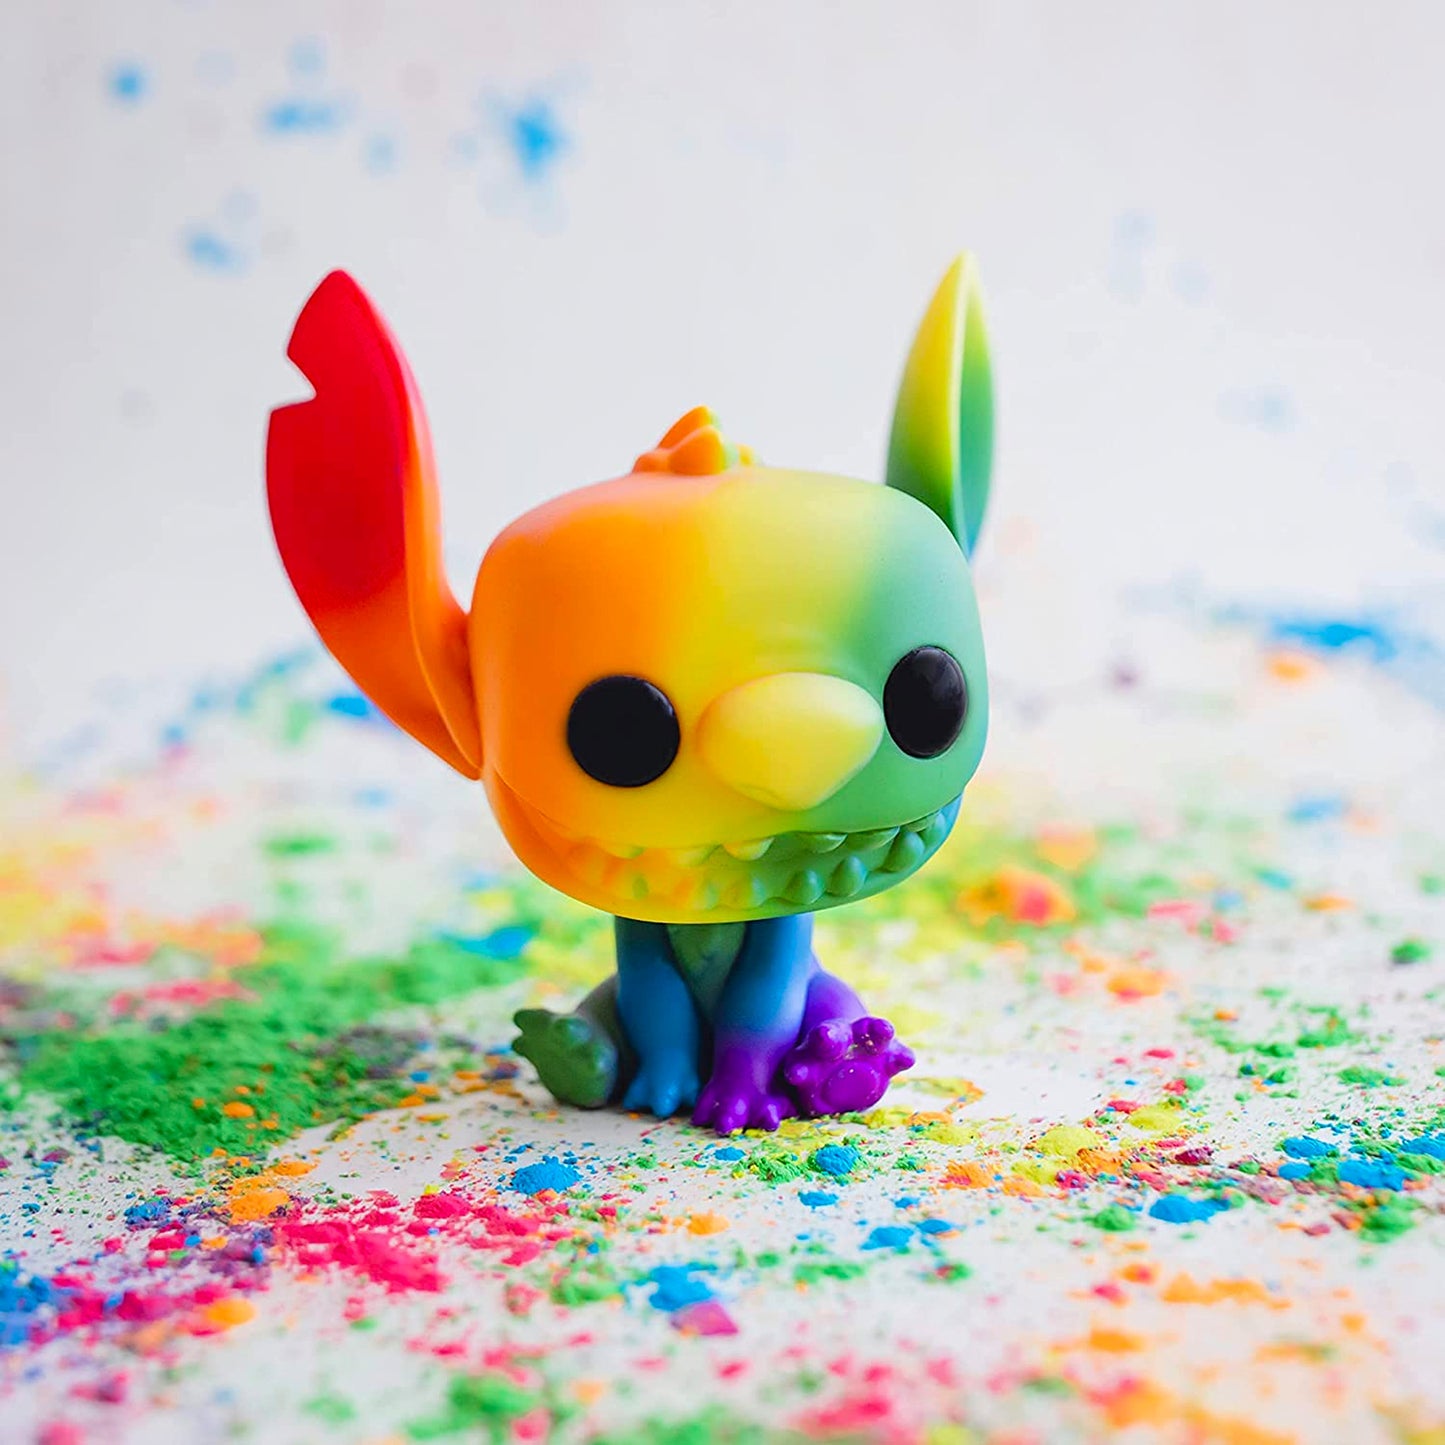 Figurine Pop Stitch #1045 - Funko Stitch Disney